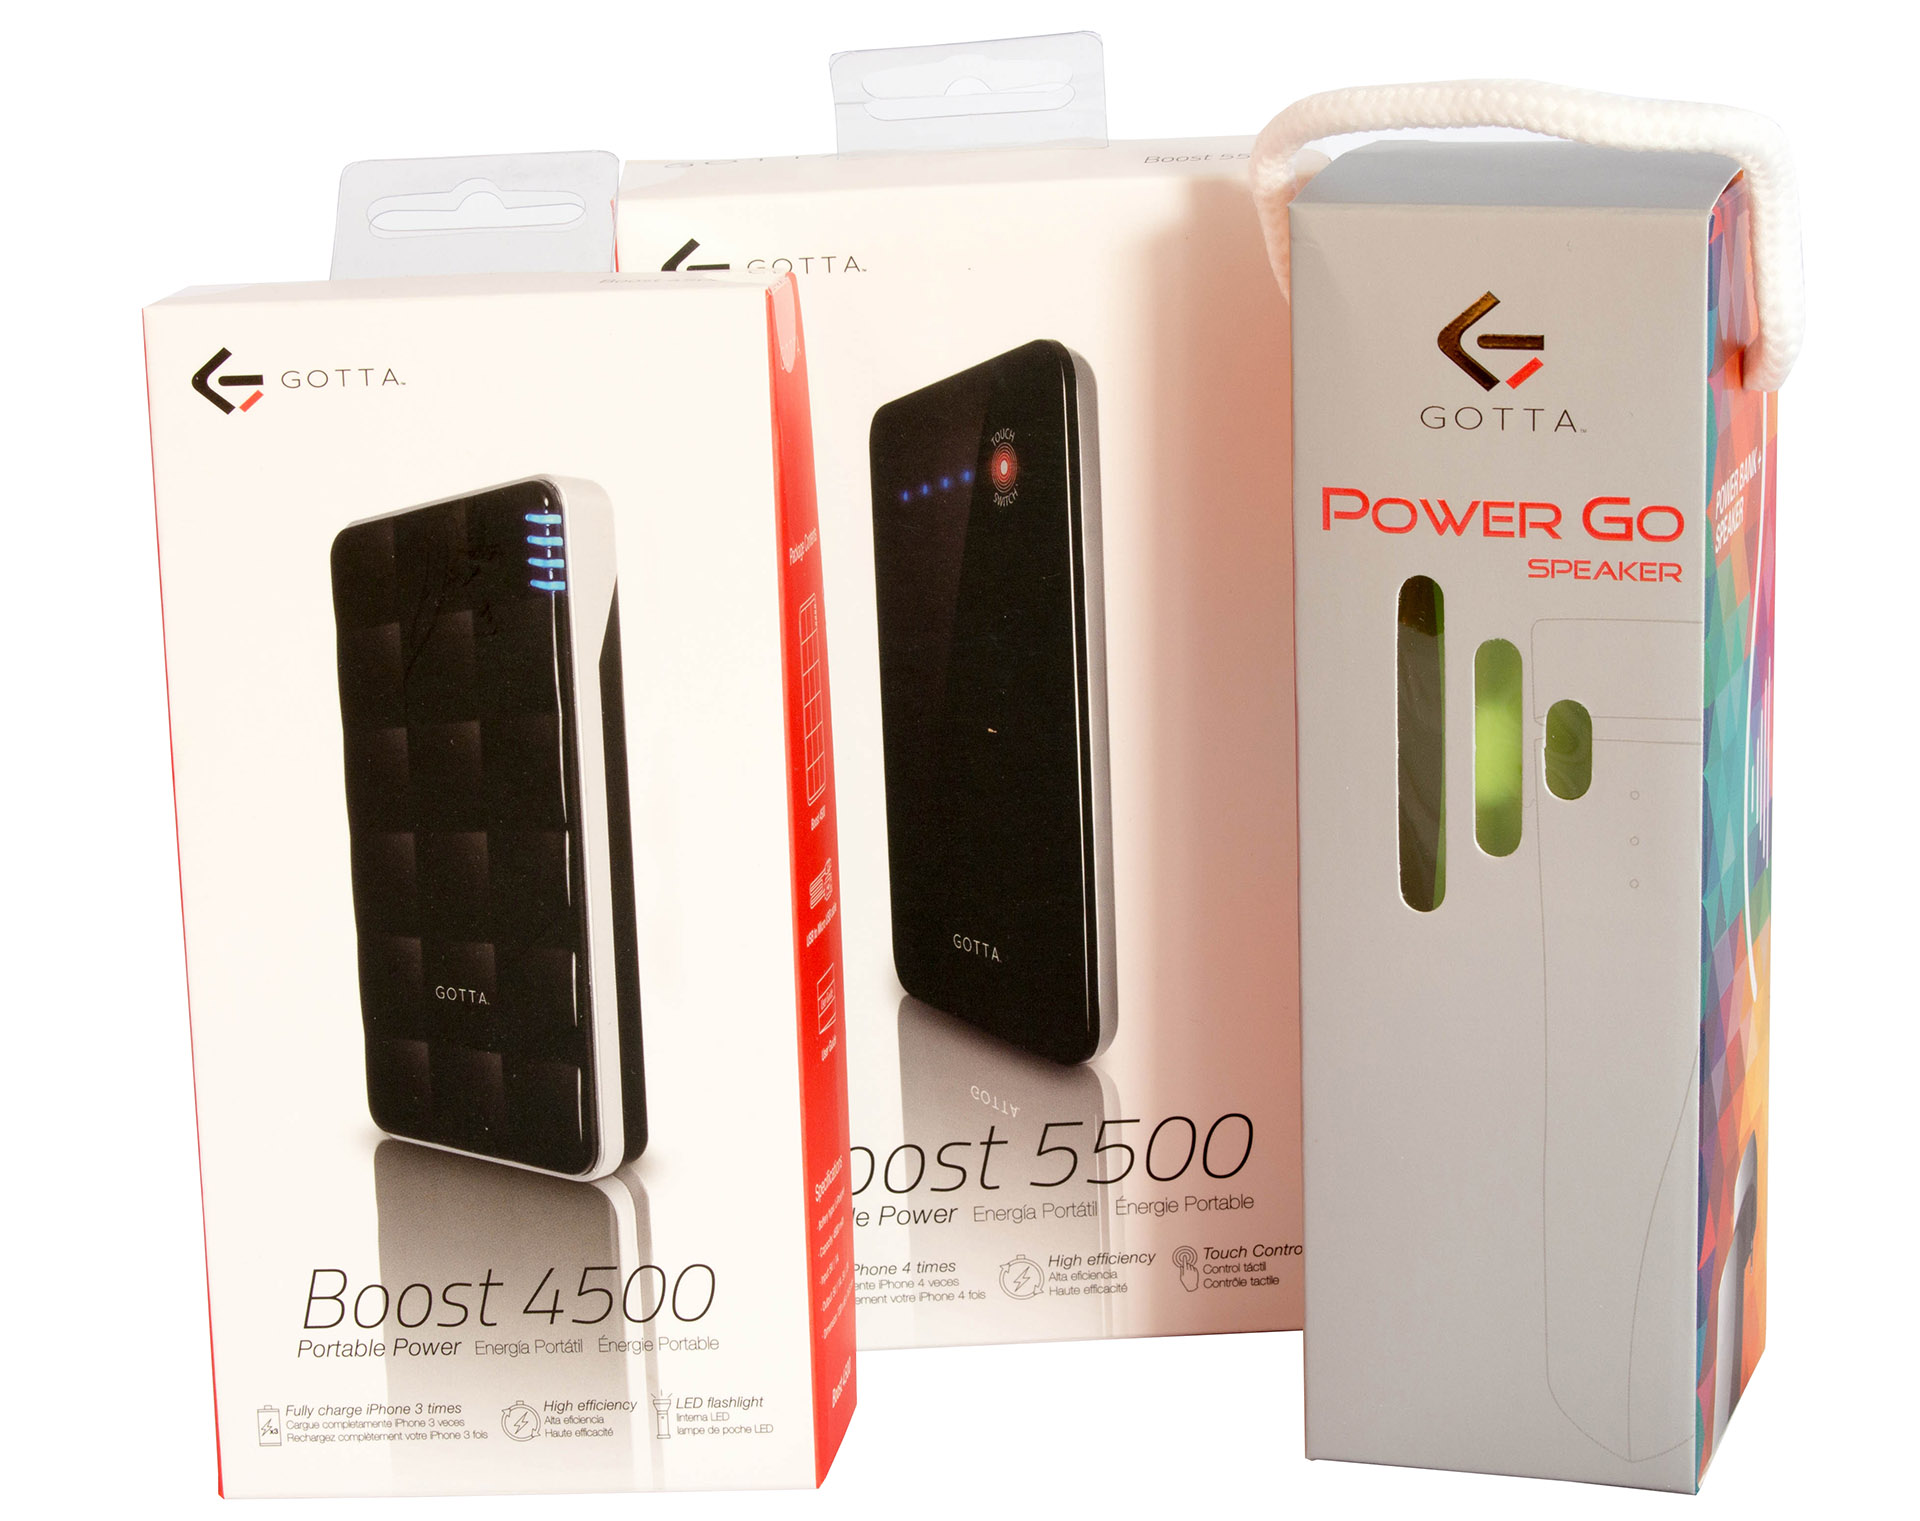 GOTTA Boost 5500, 4500 & Power Go test